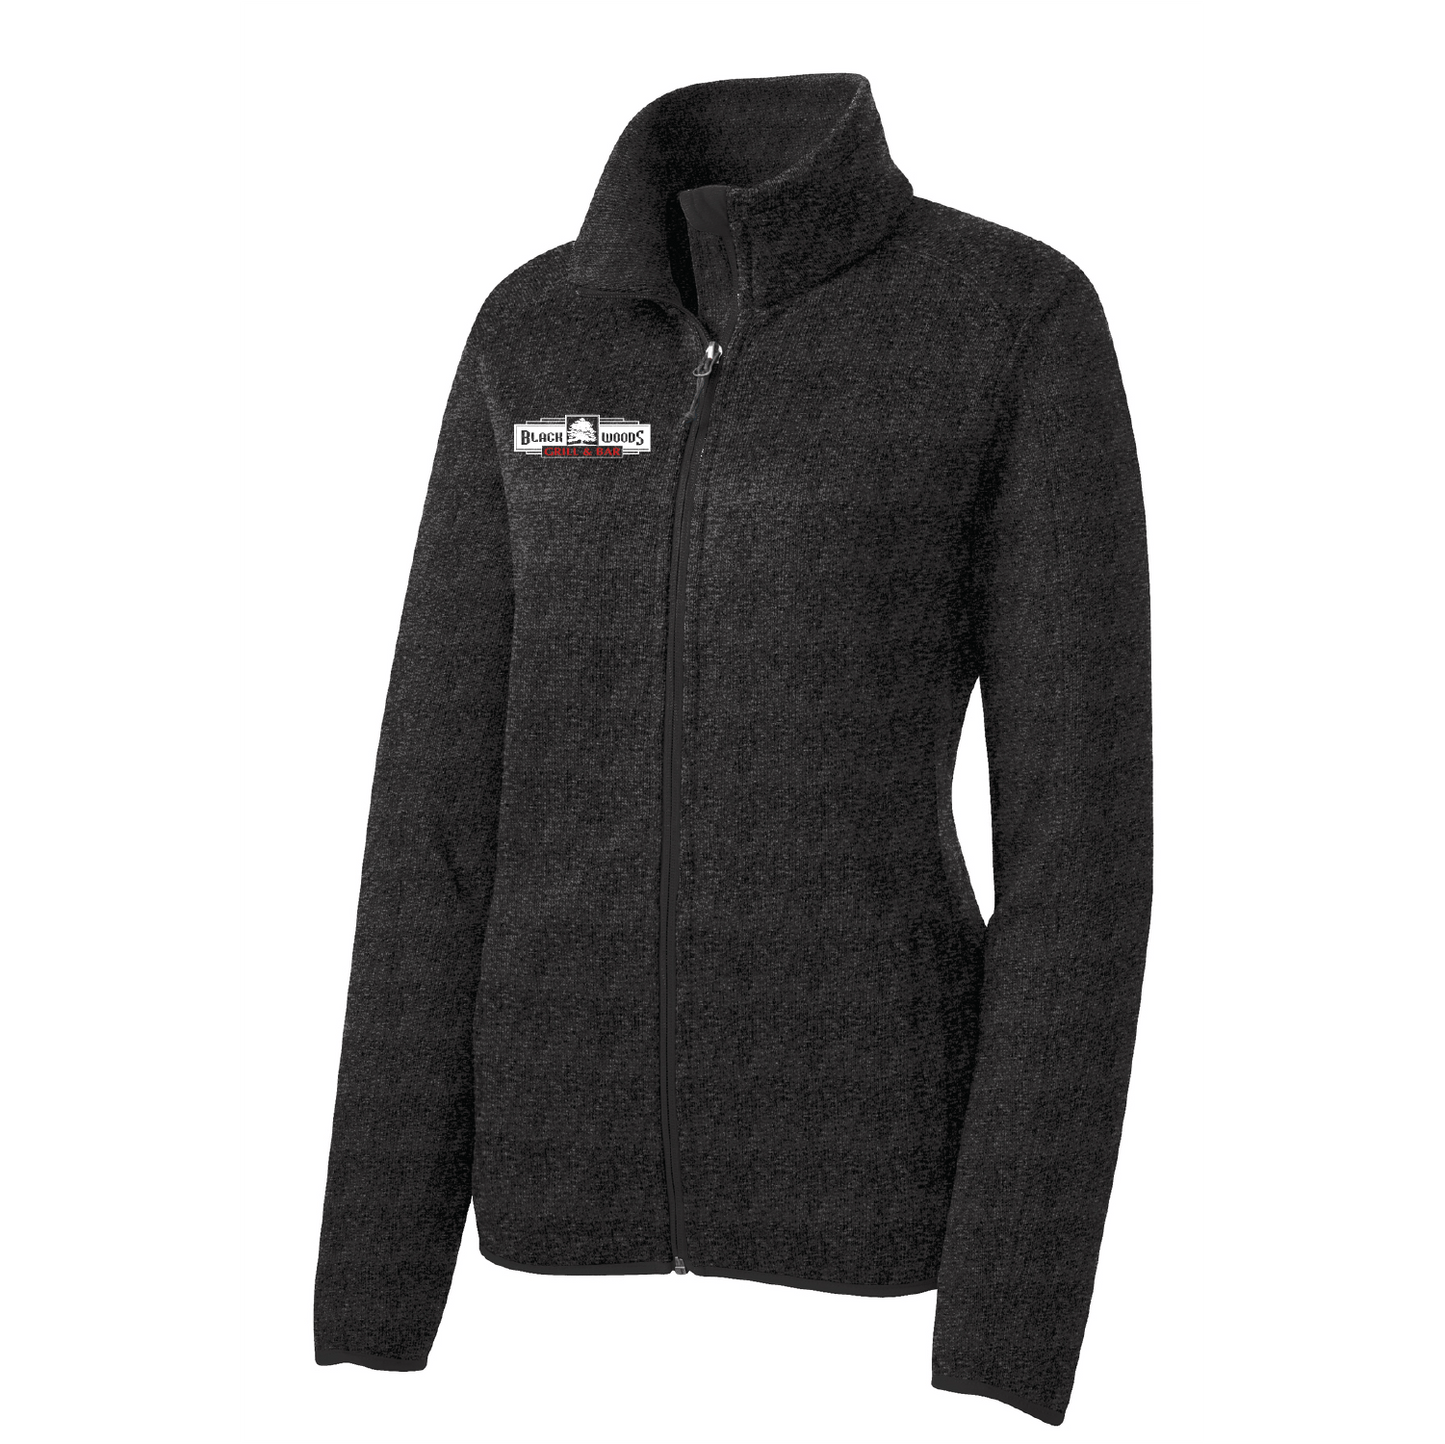 Wholesale Black Woods Ladies Sweater Fleece Jacket - DSP On Demand